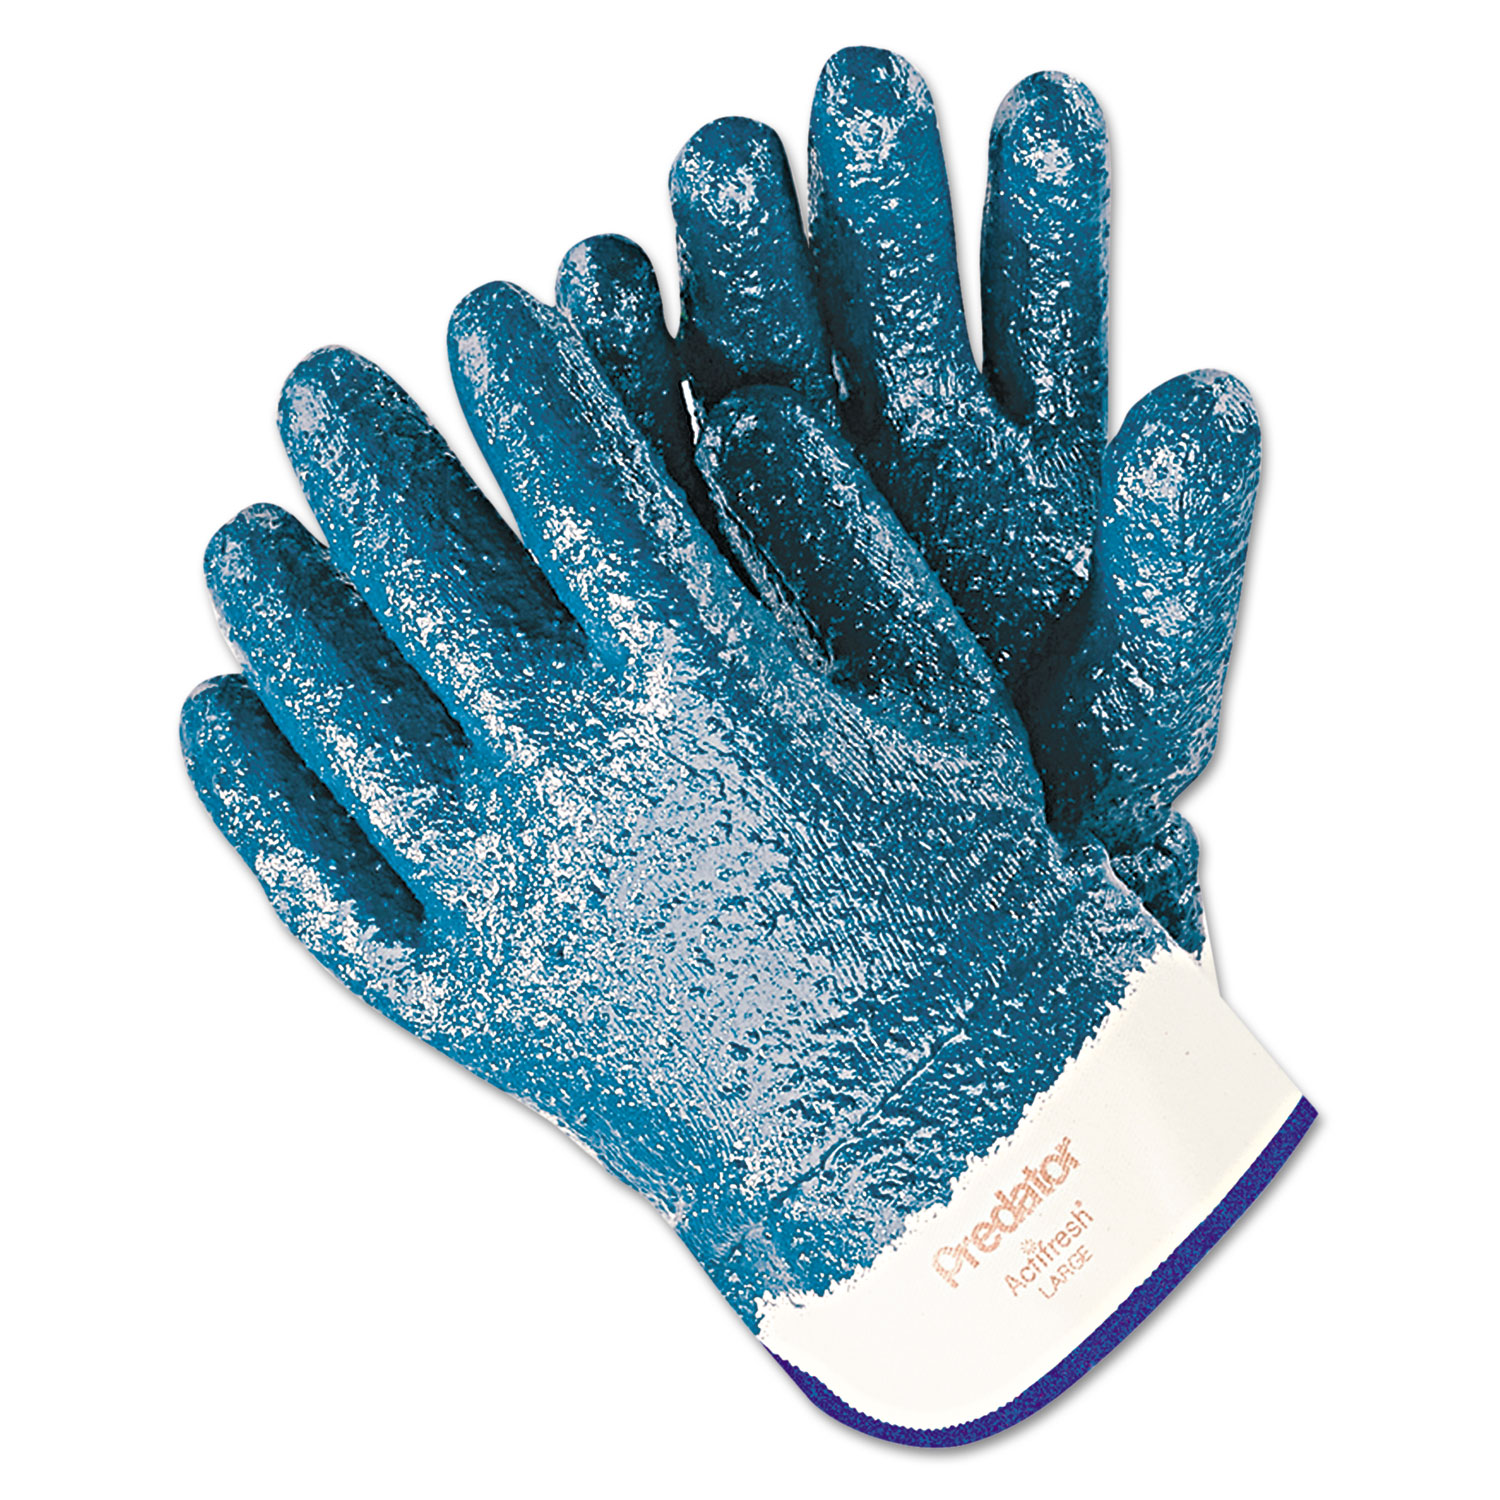  MCR Safety 9761R Predator Premium Nitrile-Coated Gloves, Blue/White, Large, 12 Pairs (MPG9761R) 